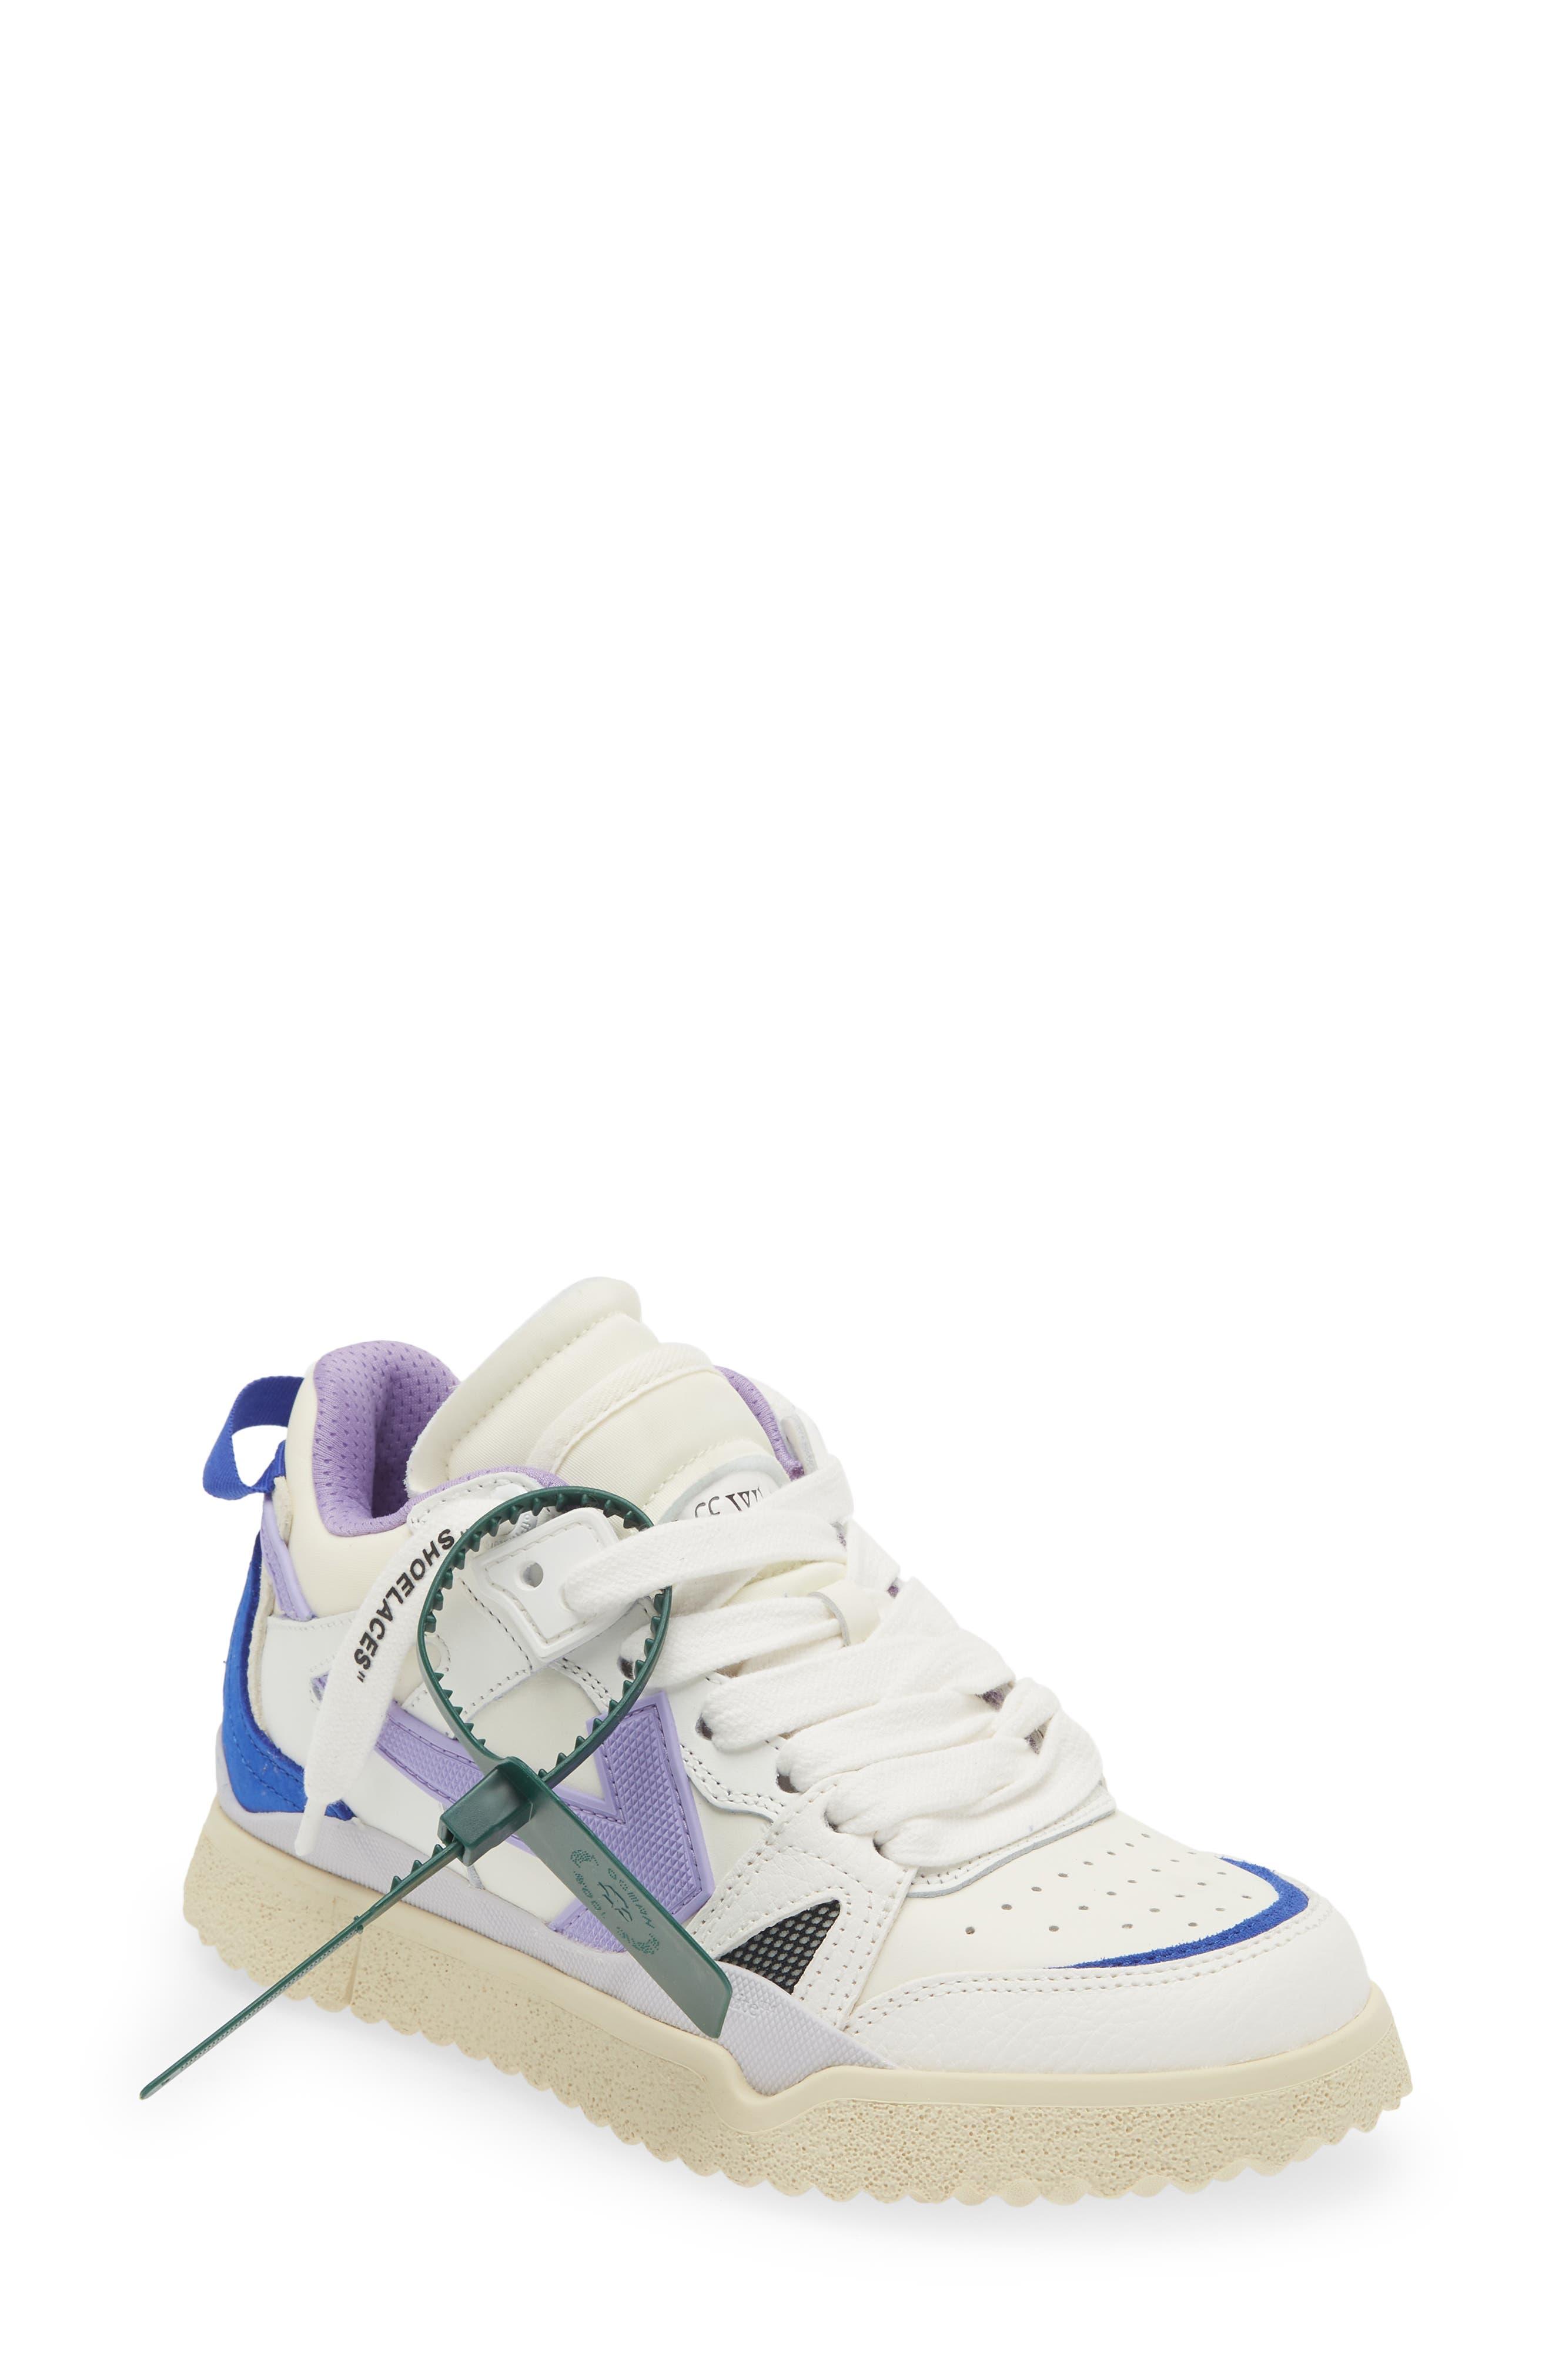 New Midtop Sponge Leather Sneaker - White - Off-White c/o Virgil Abloh  Sneakers - Yahoo Shopping